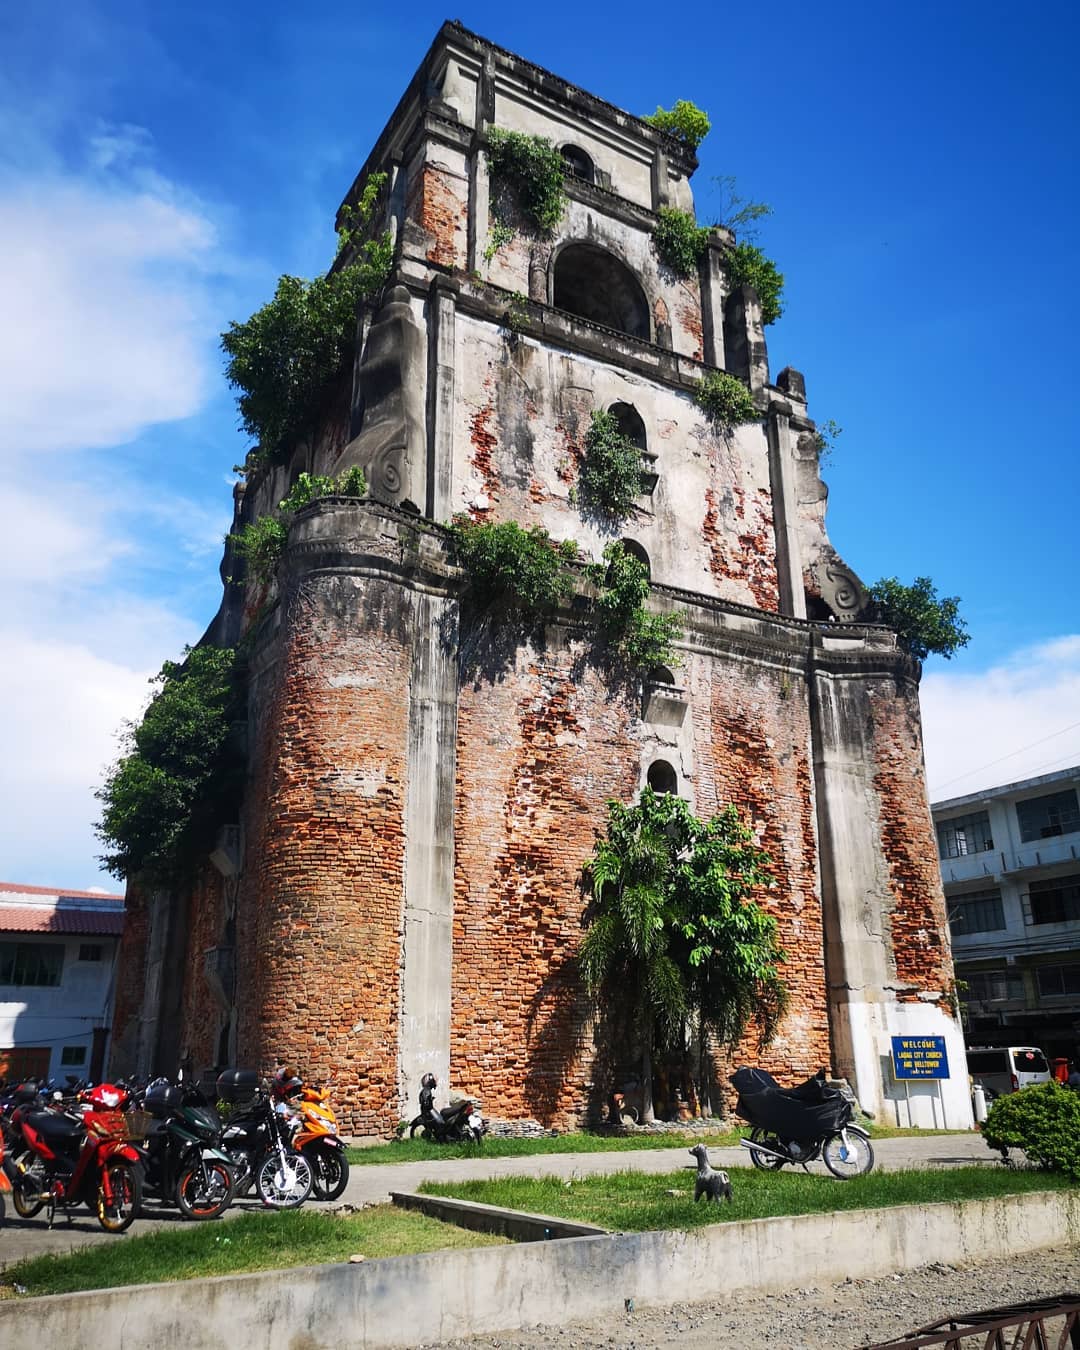 Ilocos Norte - Sinking Bell Tower